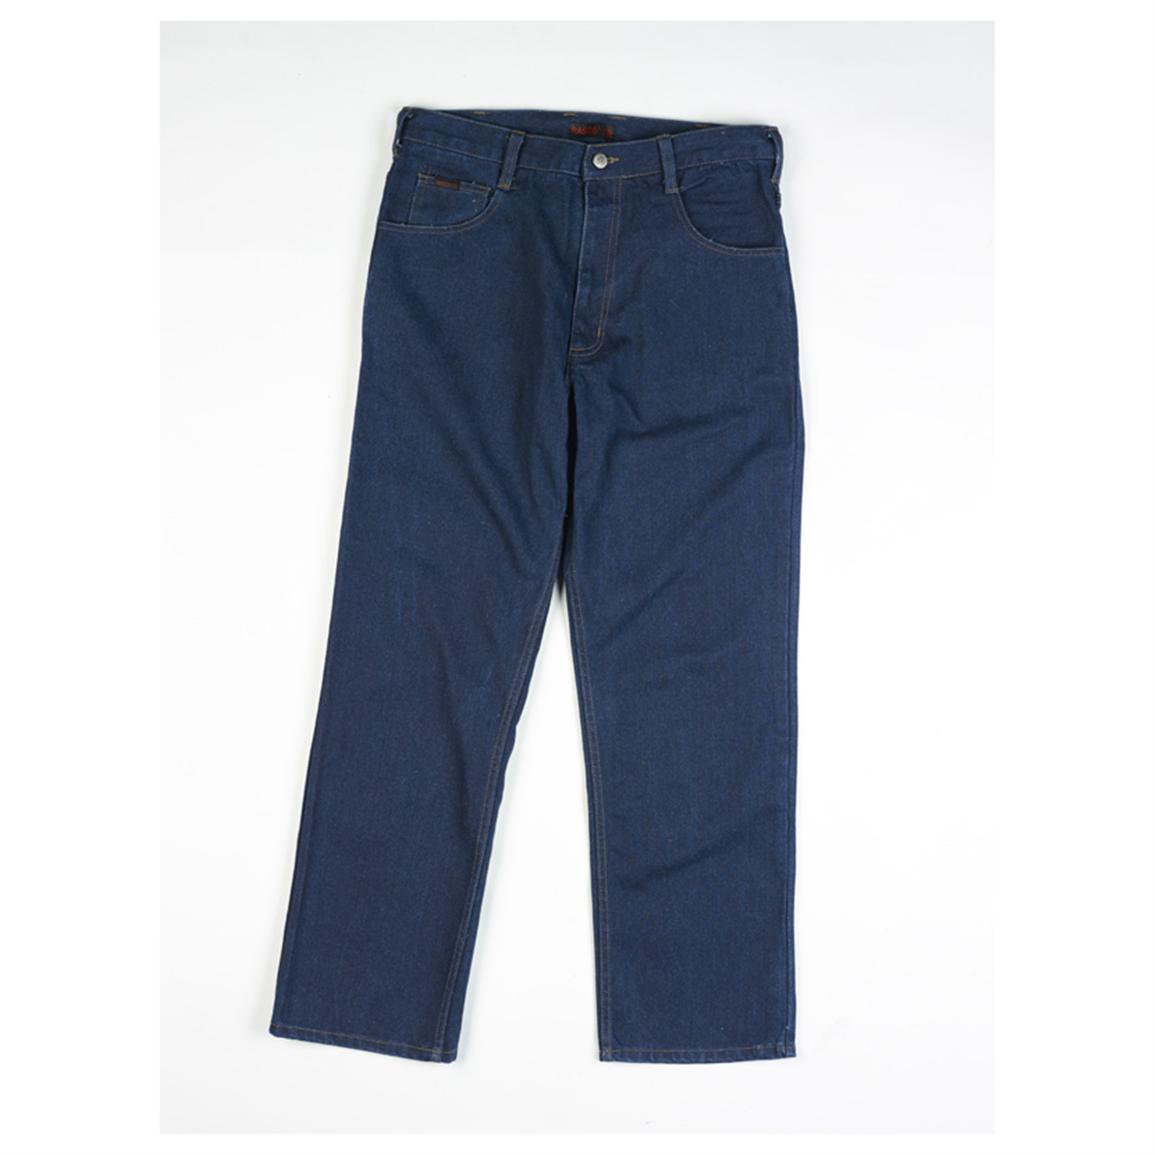 Rasco® Fire Retardant Work Jeans - 591348, Jeans & Pants at Sportsman's ...